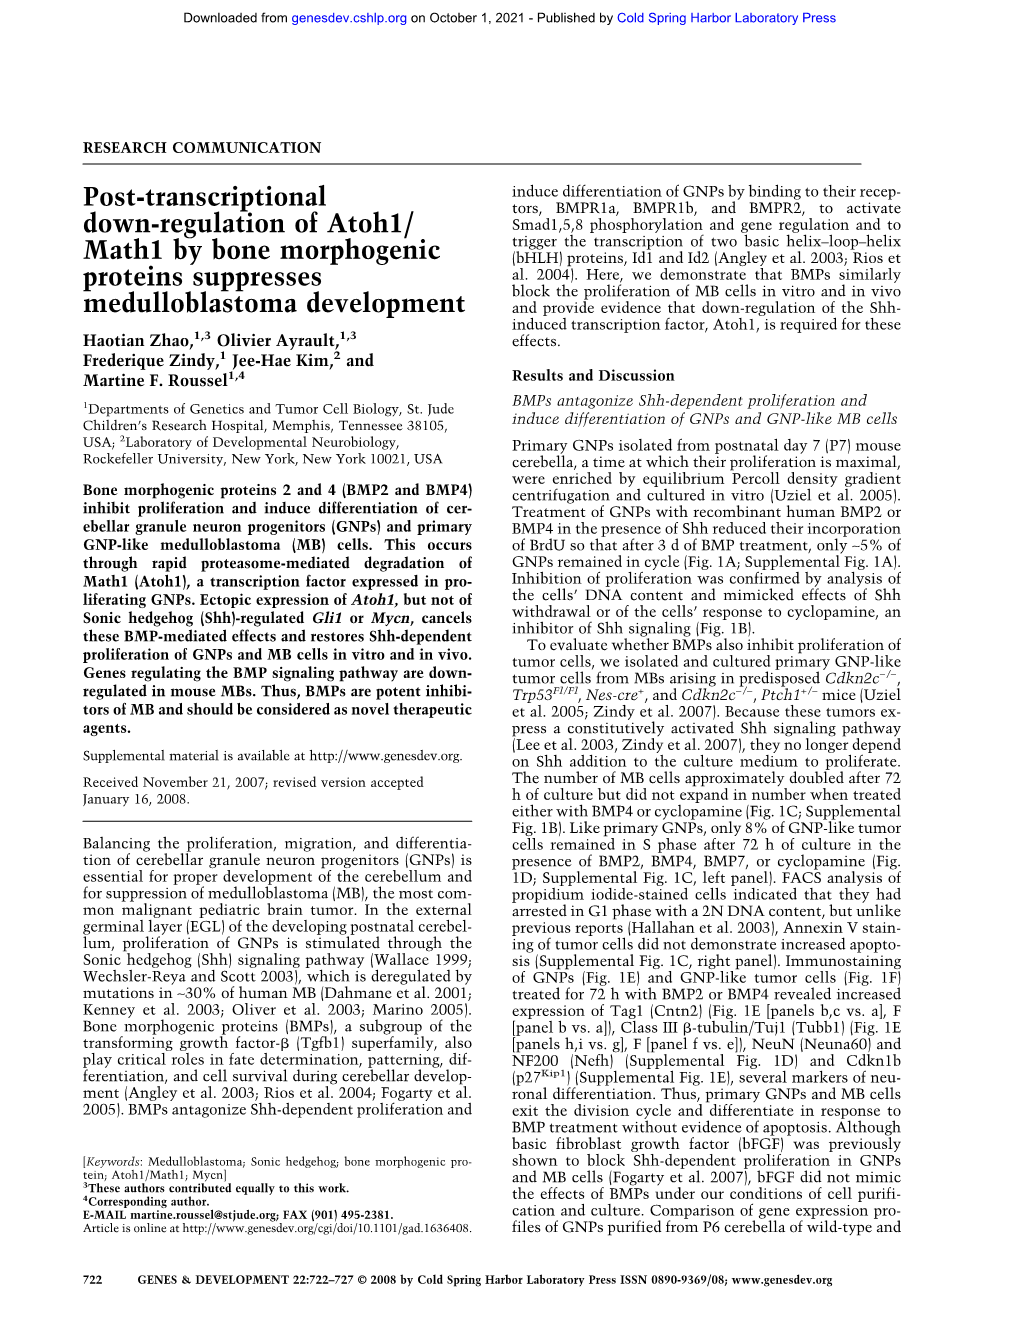 Post-Transcriptional Down-Regulation of Atoh1/ Math1 by Bone Morphogenic Proteins Suppresses Medulloblastoma Development